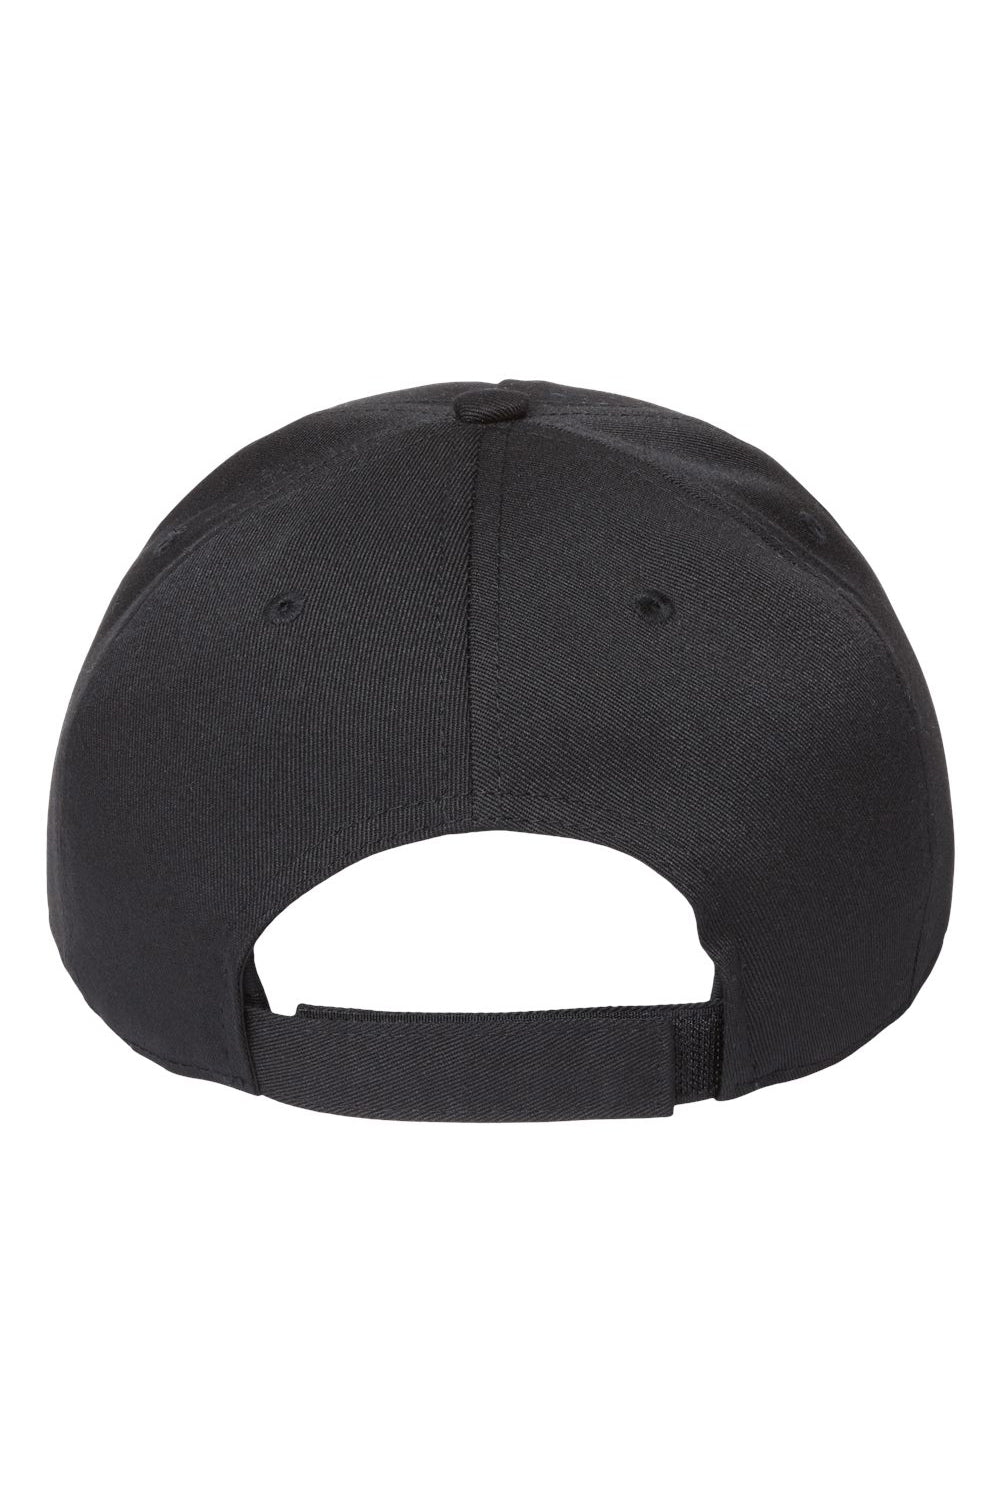 Atlantis Headwear FIJI Mens Sustainable Adjustable Hat Black Flat Back